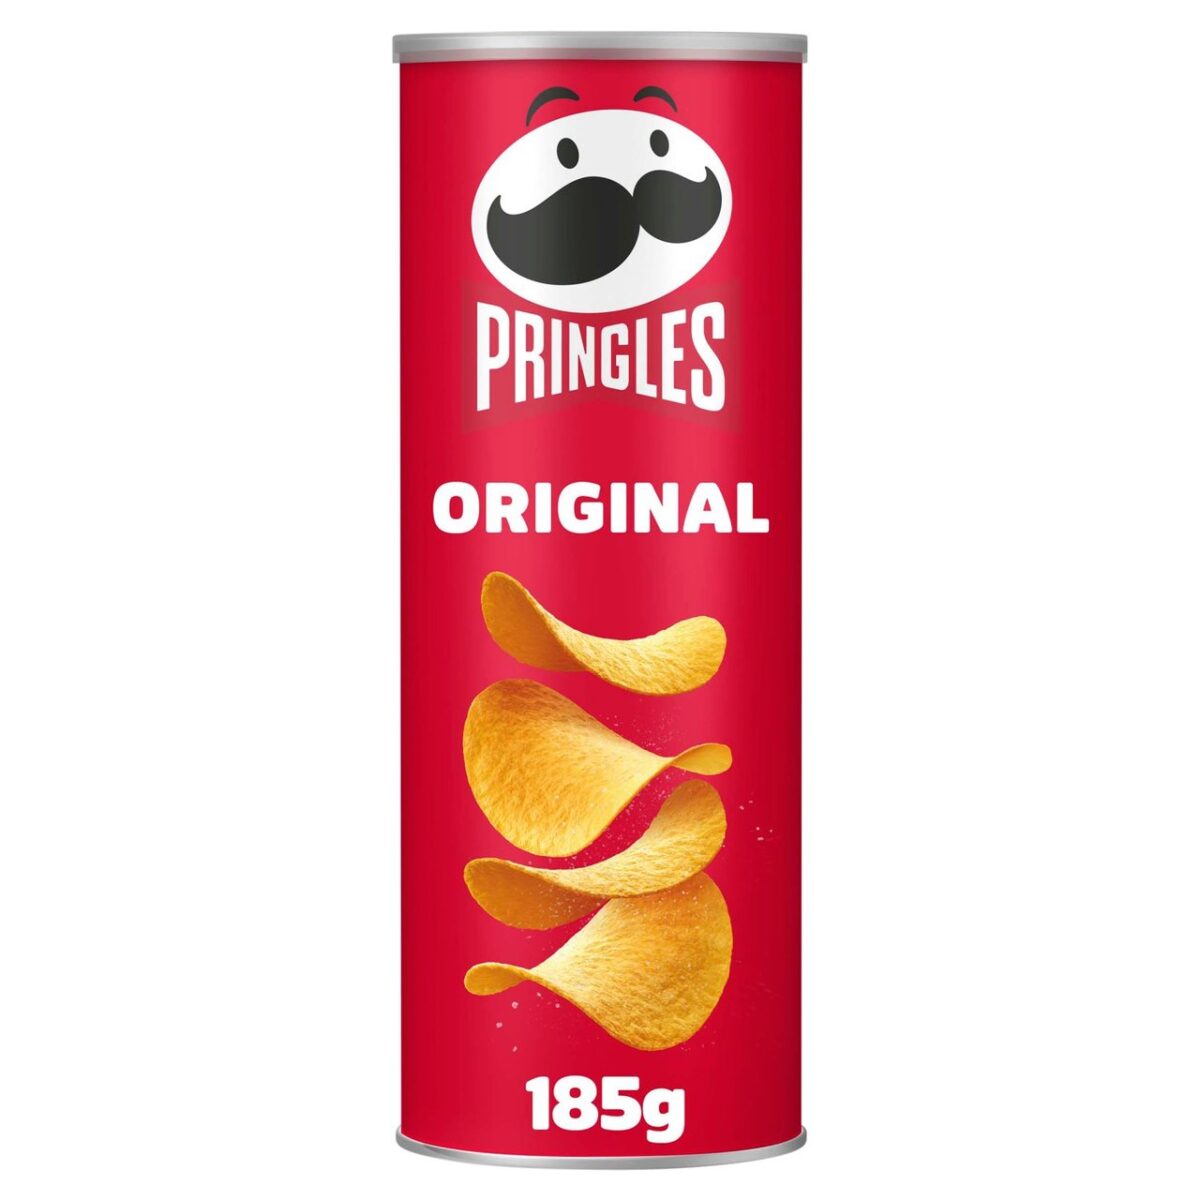 Photo shows a tube of Original flavor Pringles, which are vegan-friendly crisps.